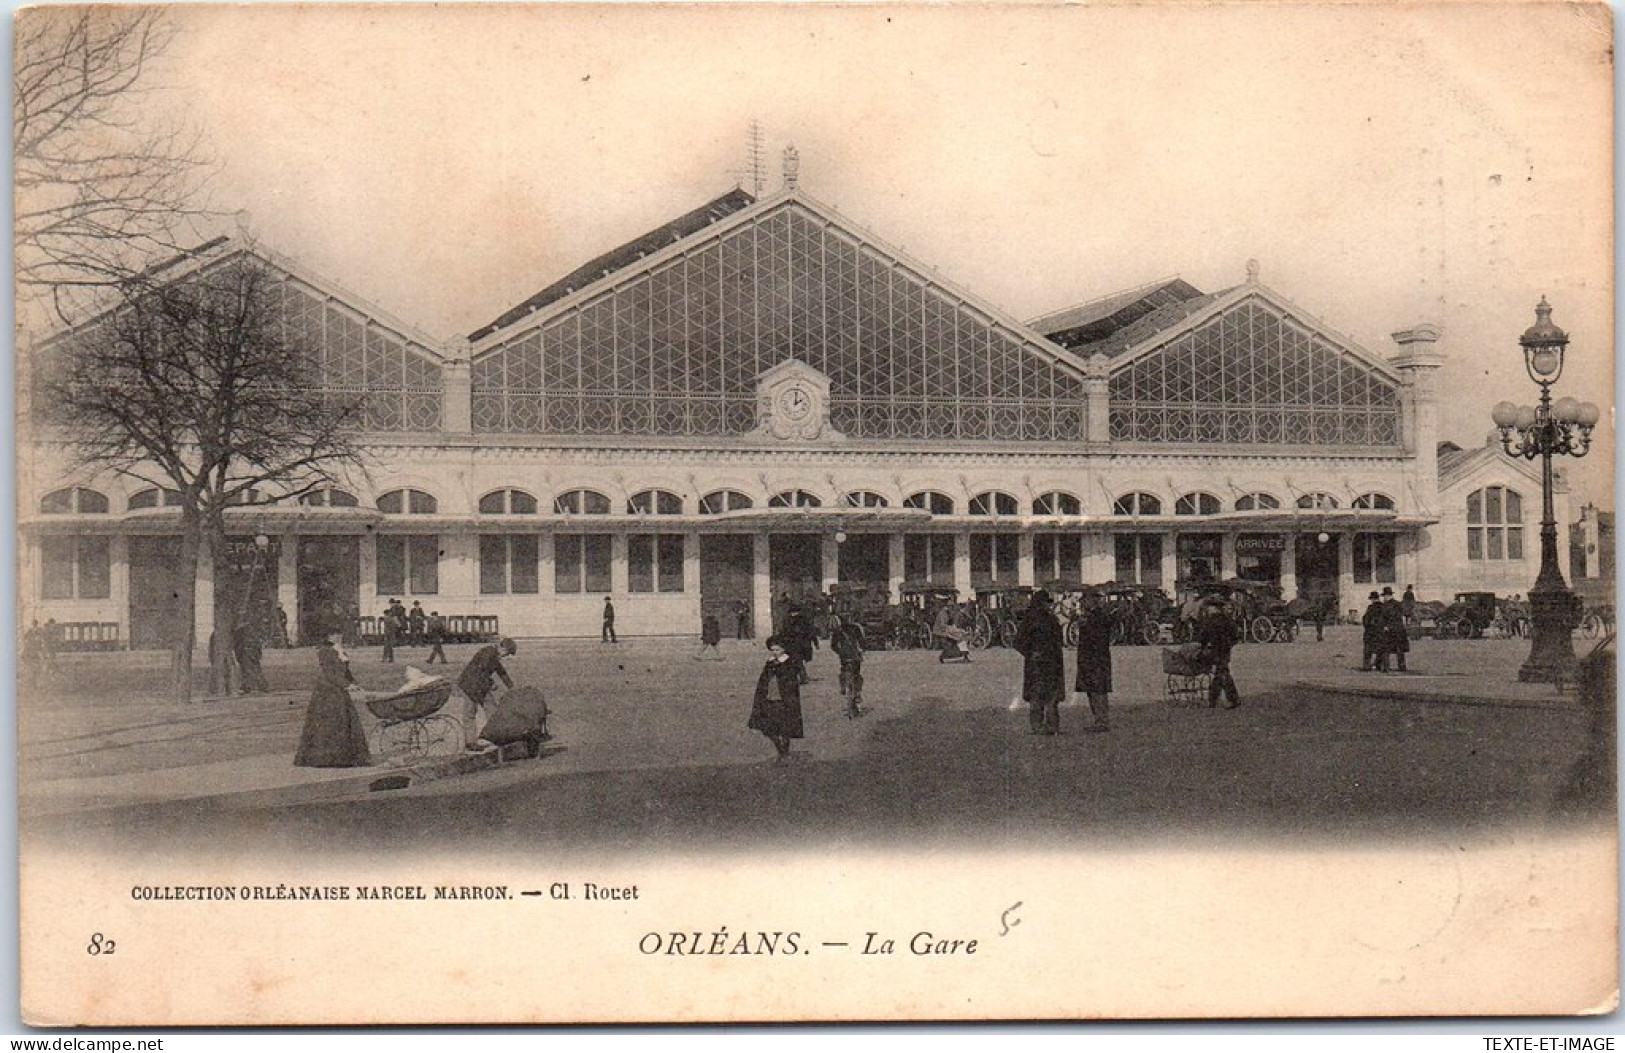 45 ORLEANS - La Gare (Ed Marcel Marron) - Orleans